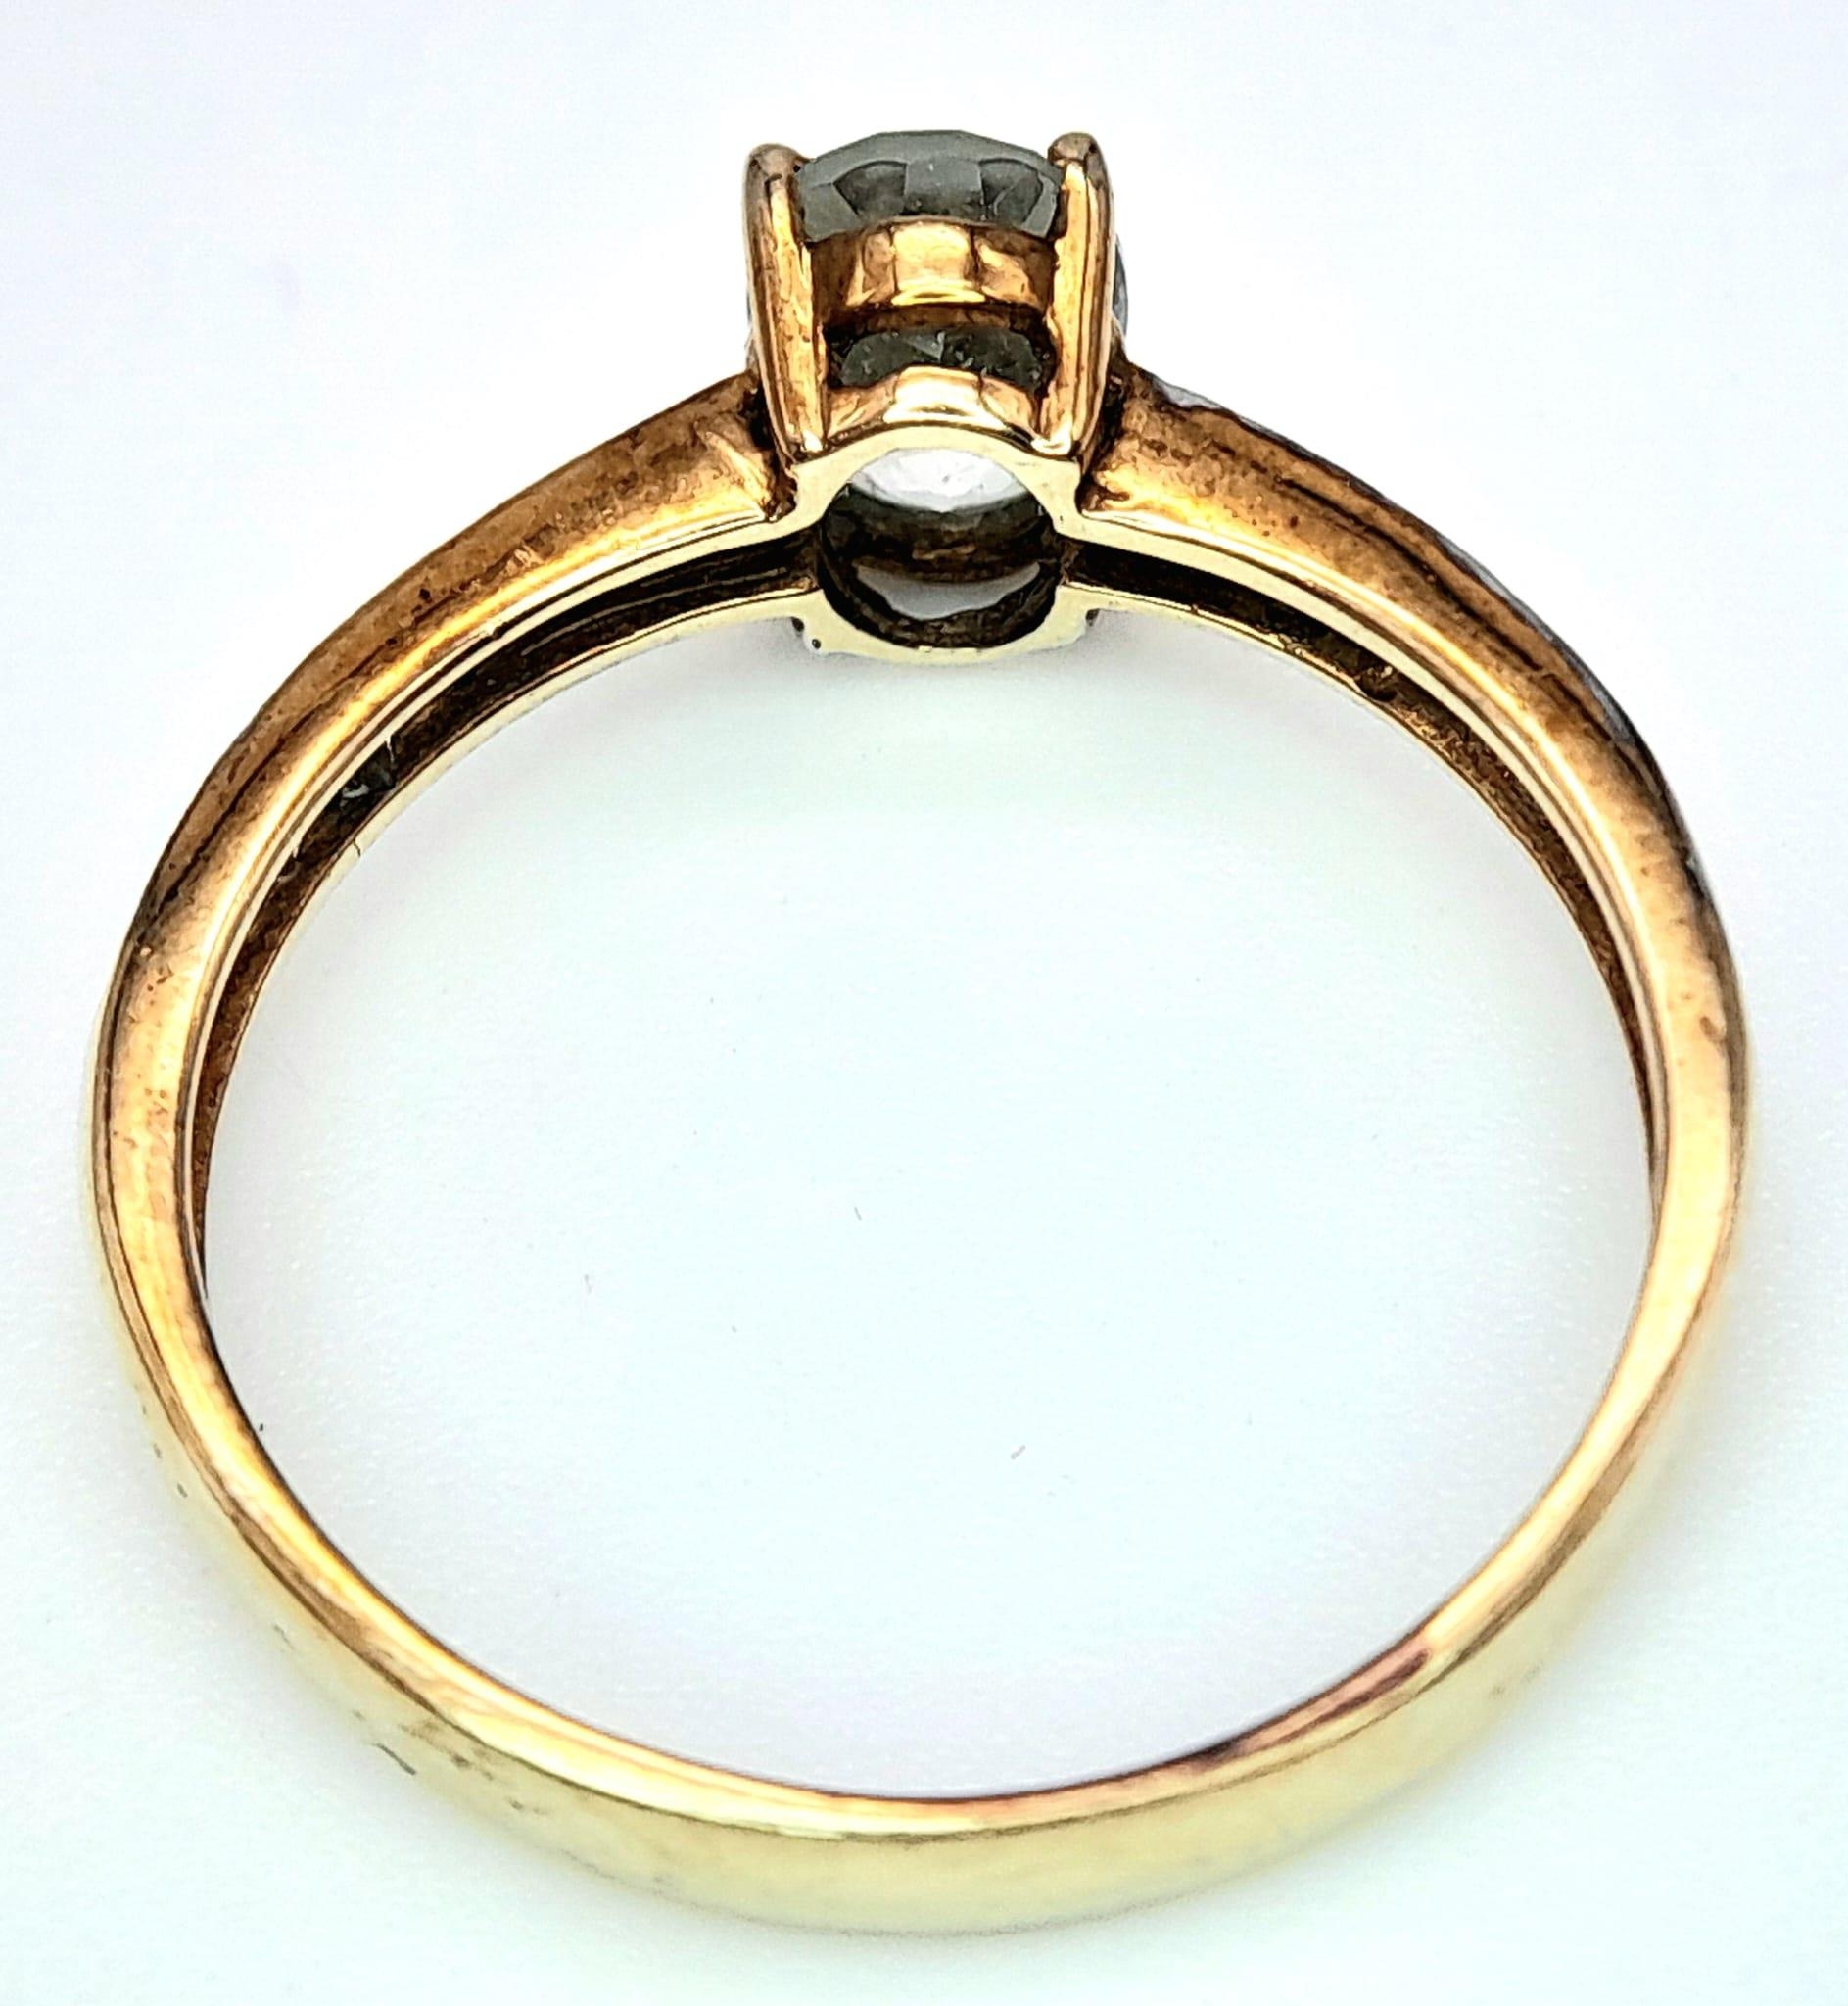 A 9K YELLOW GOLD DIAMOND & AQUAMARINE SET RING. OVAL AQUAMARINE GEMSTONE APPROX 0.75CT. 1.8G. SIZE N - Image 5 of 6